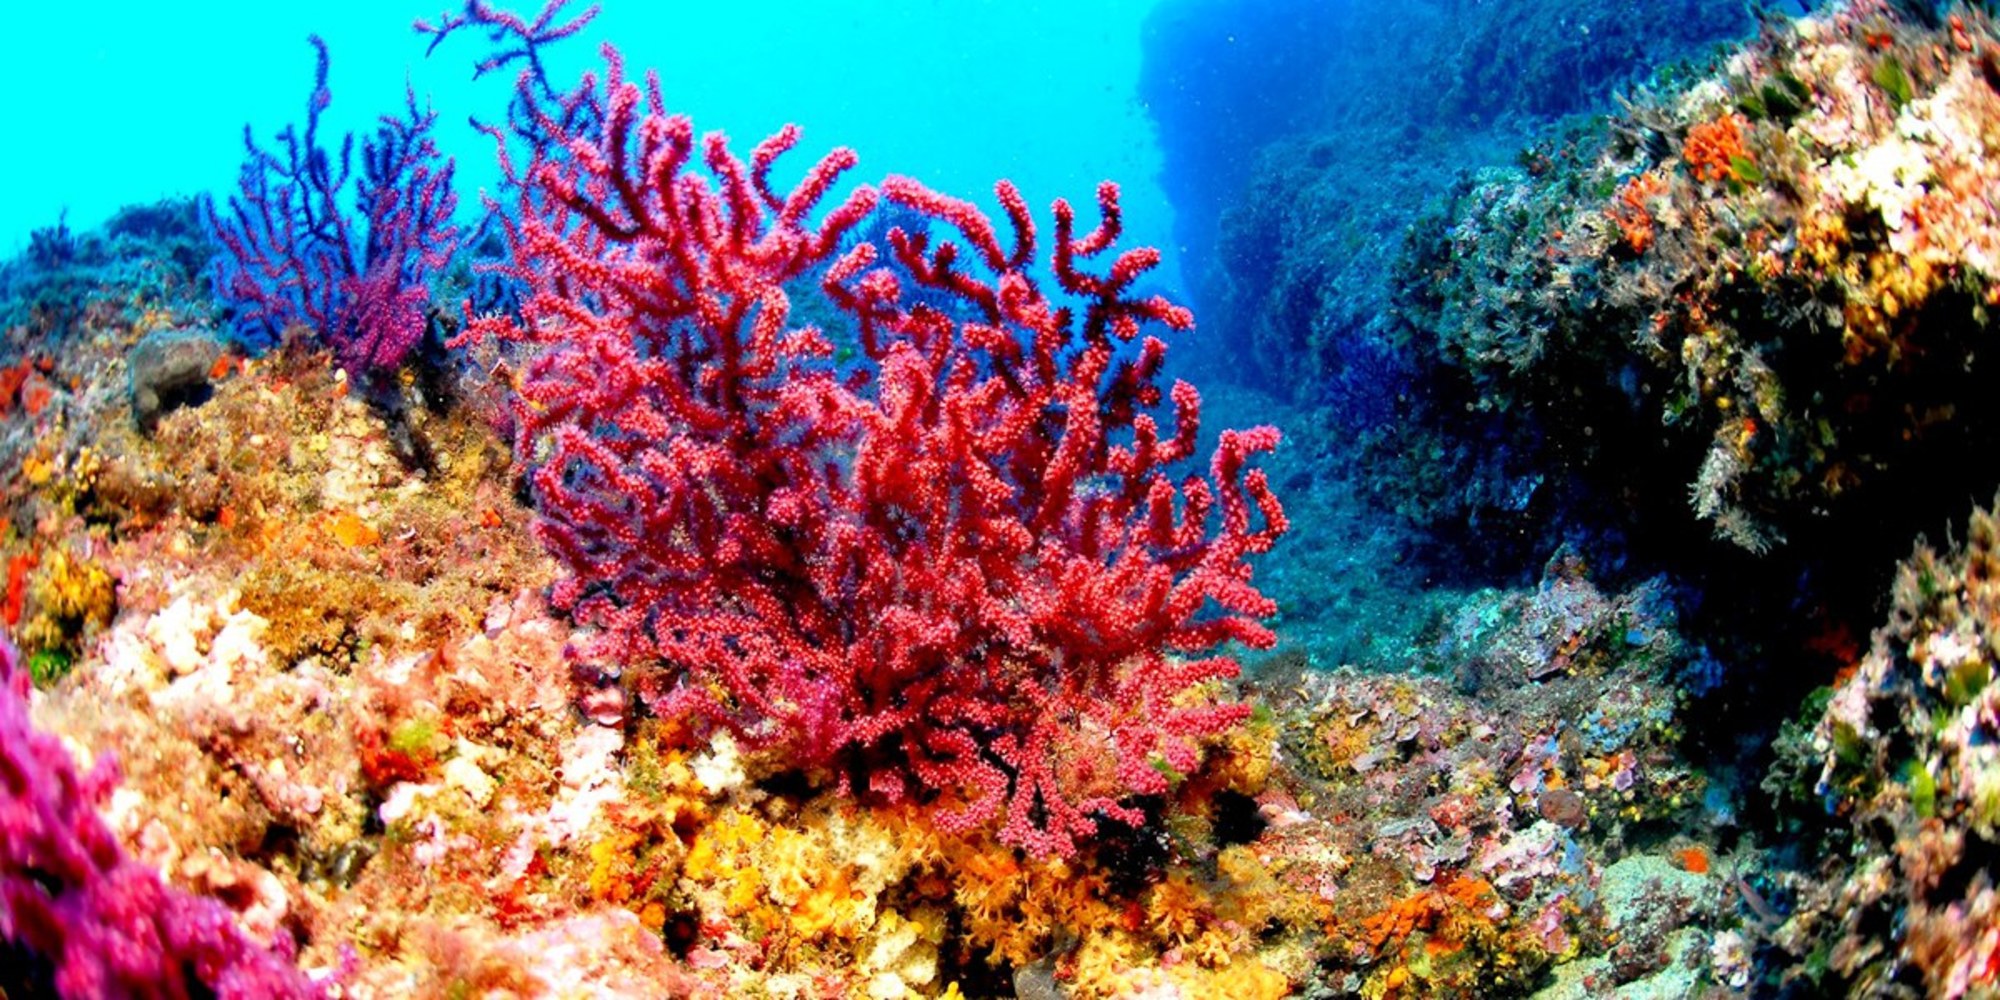 El coral. Риф коралловый 54546. Коралловые рифы Монерон. Коралловый риф Акропора. Окинава коралловые рифы.